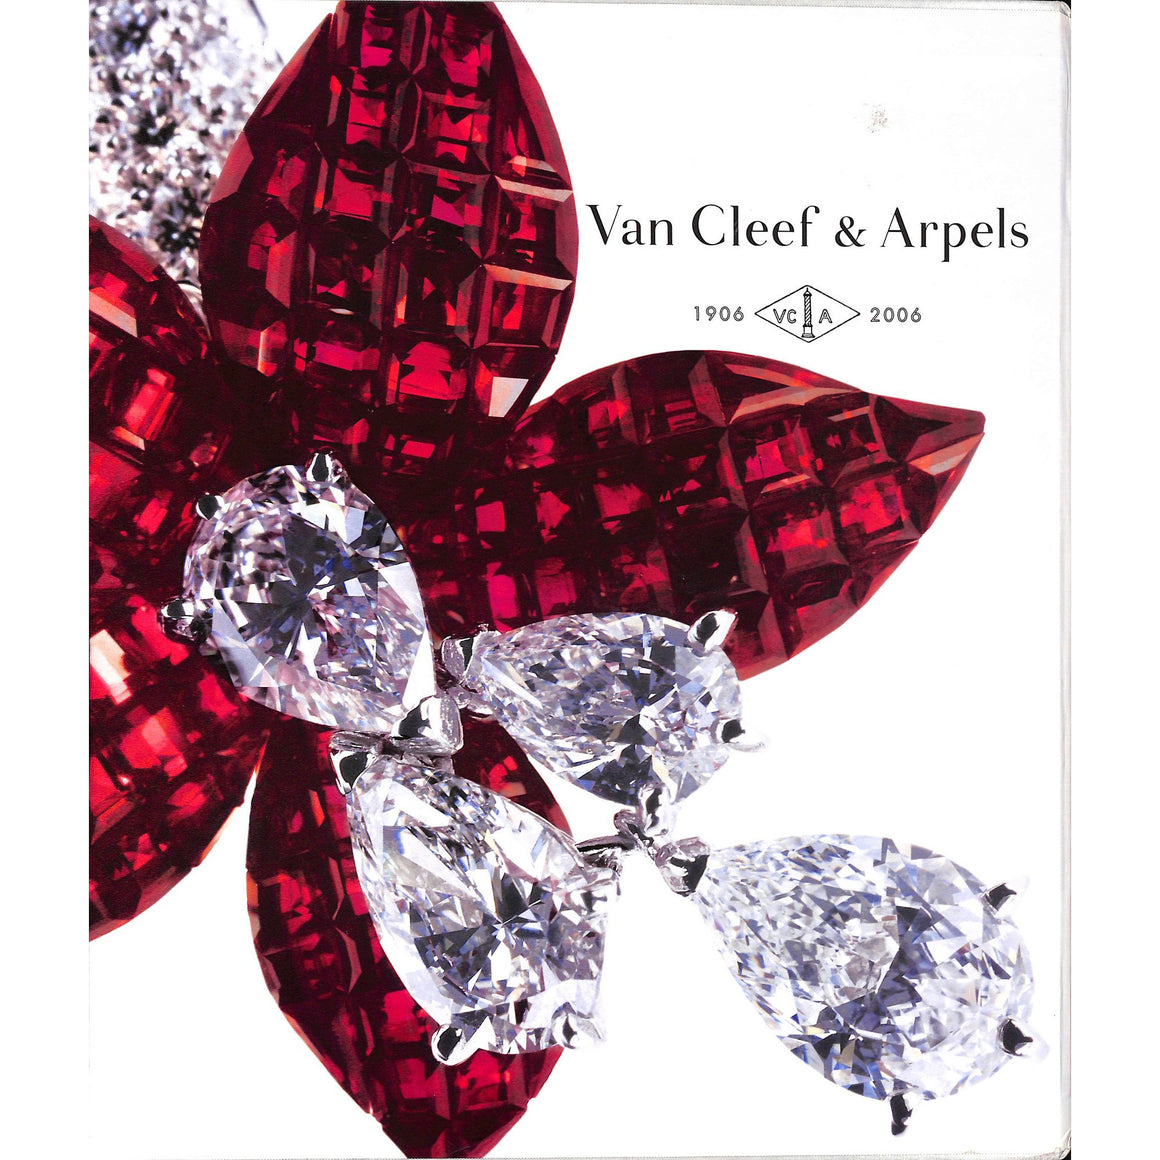 Van Cleef & Arpels Reflections of Eternity 1906-2006